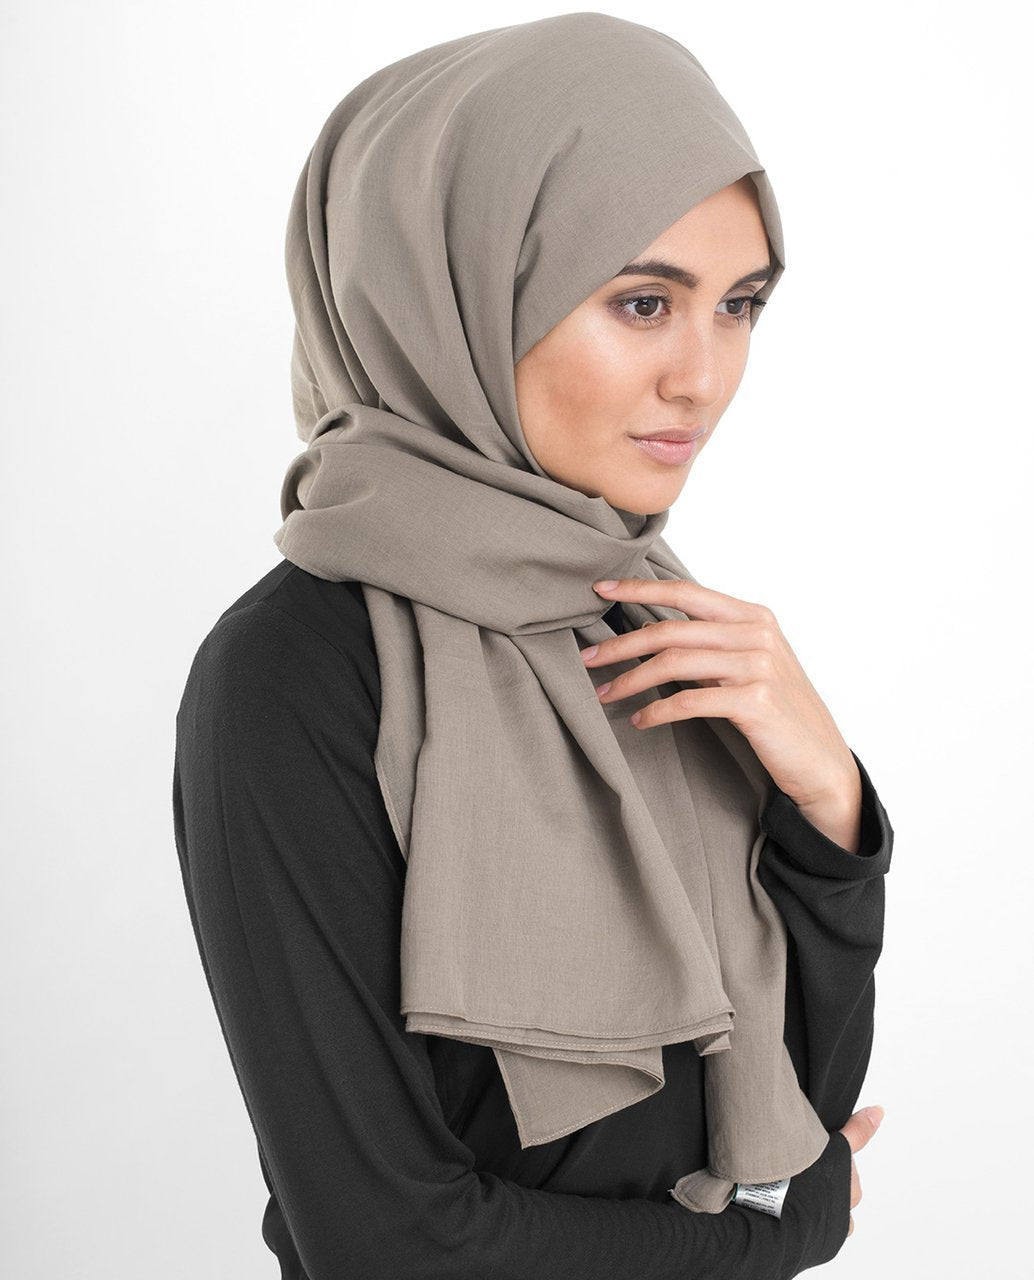 Cotton Voile Hijab Scarf Shawl in Almondine Beige - ModestPath.com